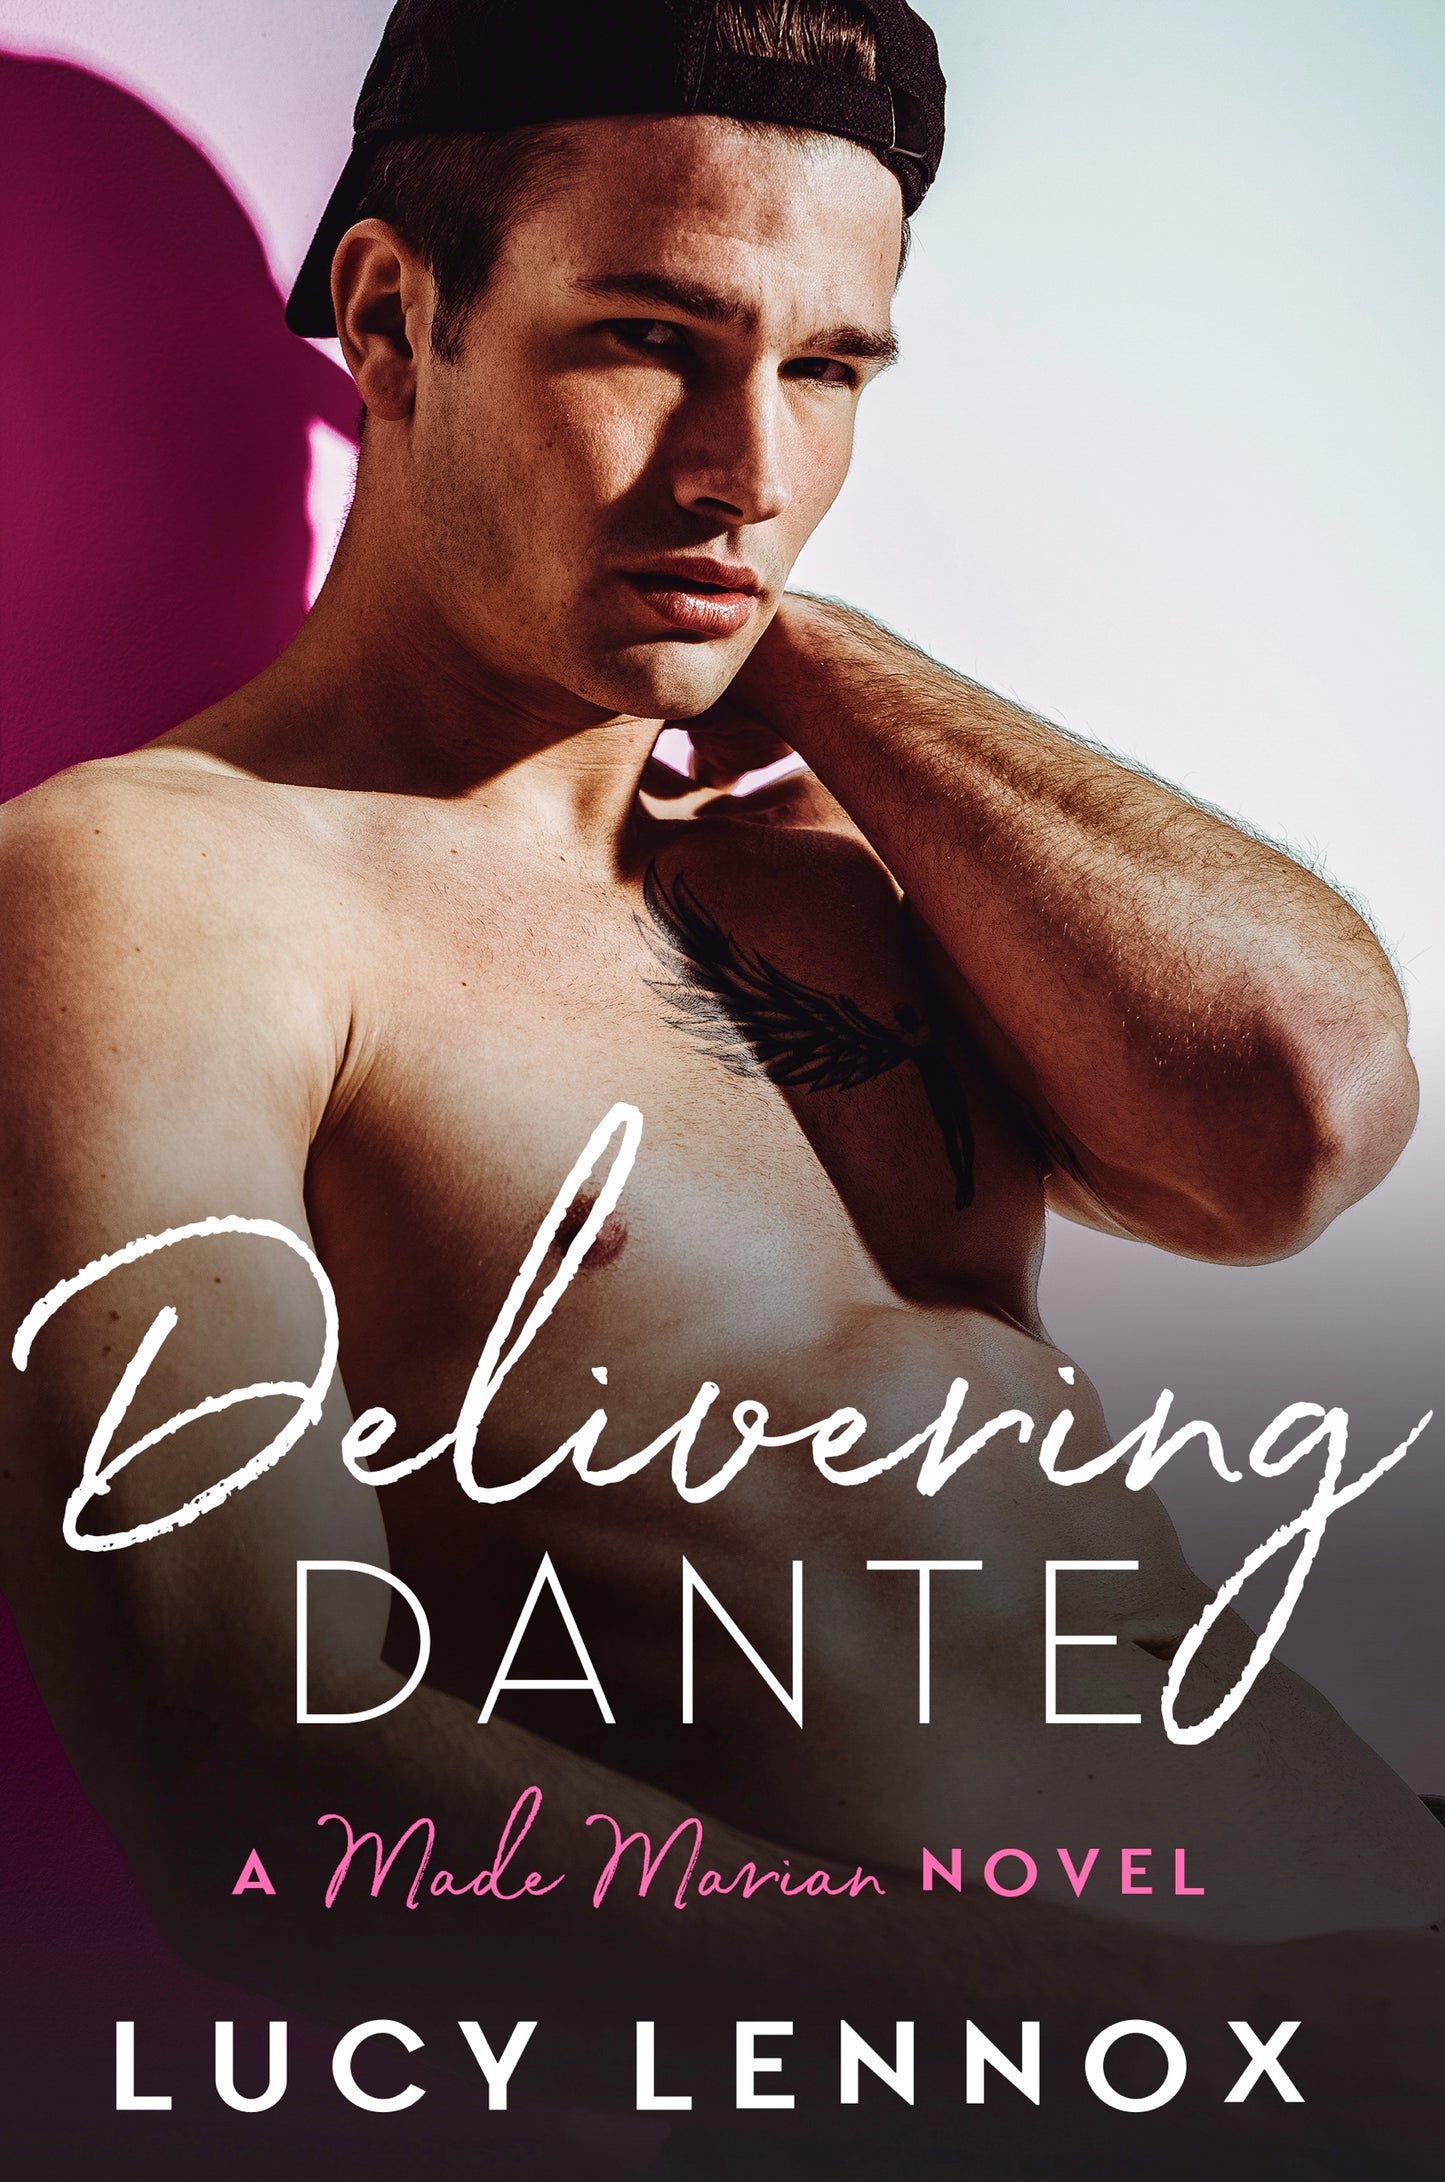 Delivering Dante